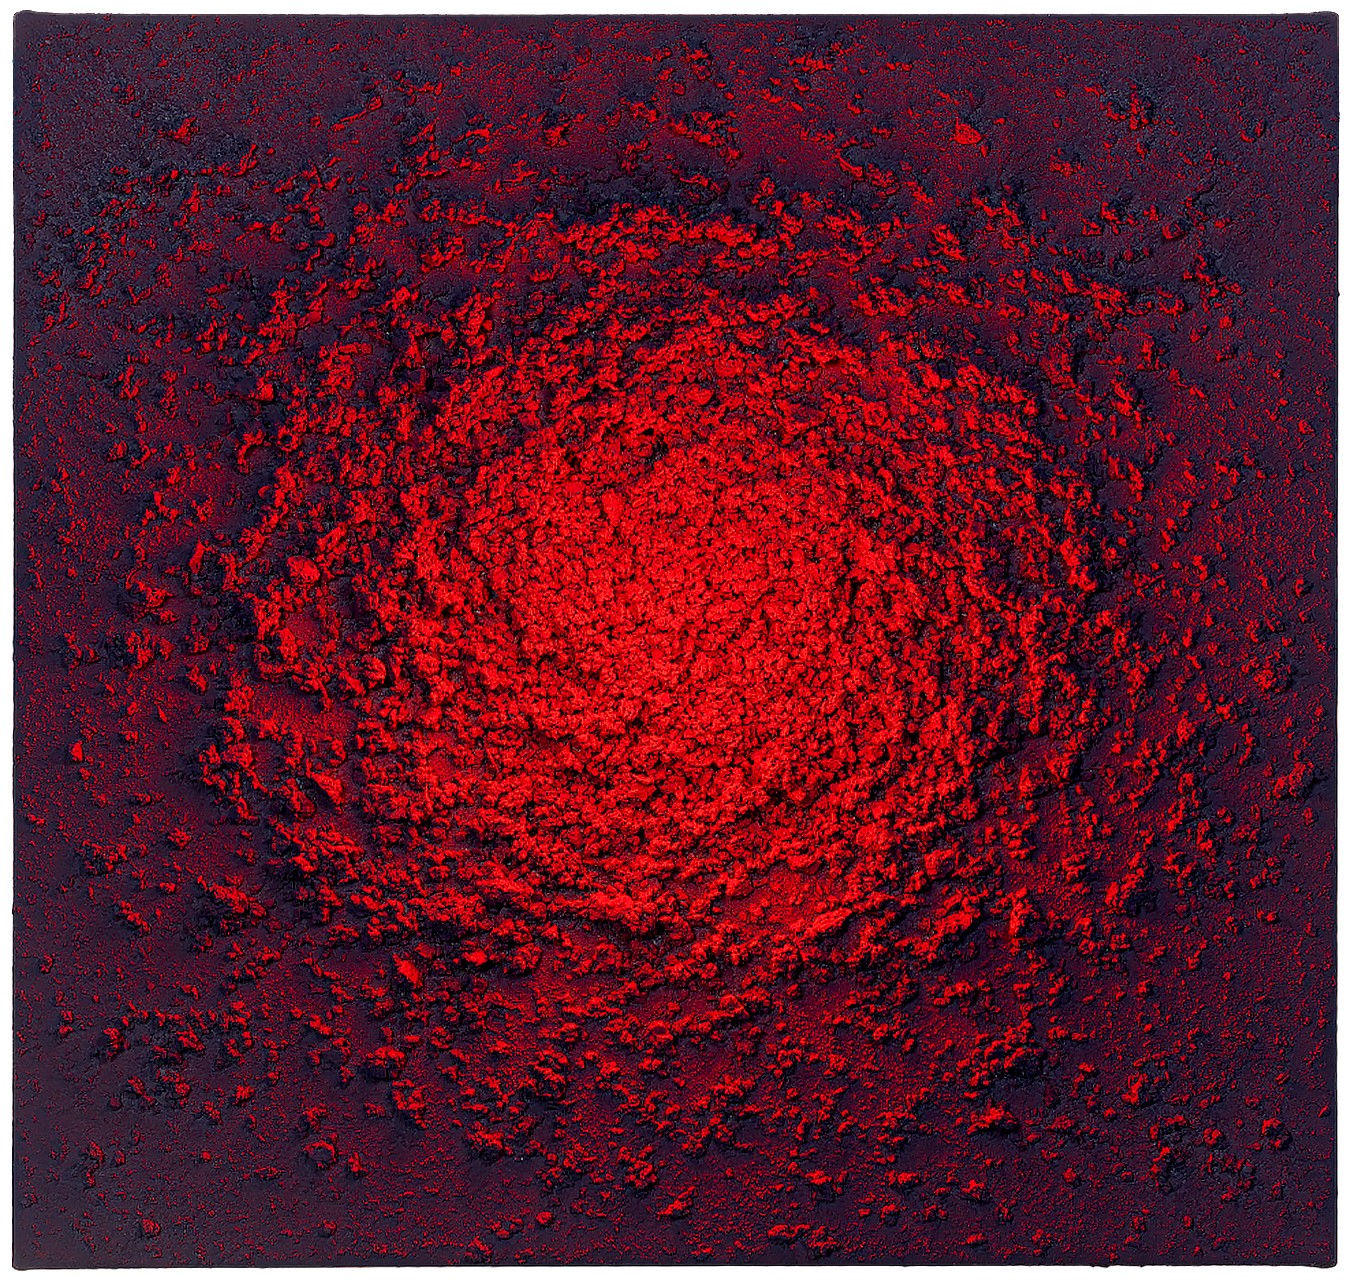 Interstellar Red 18.20 - SAMUEL DEJONG - Galeries Bartoux